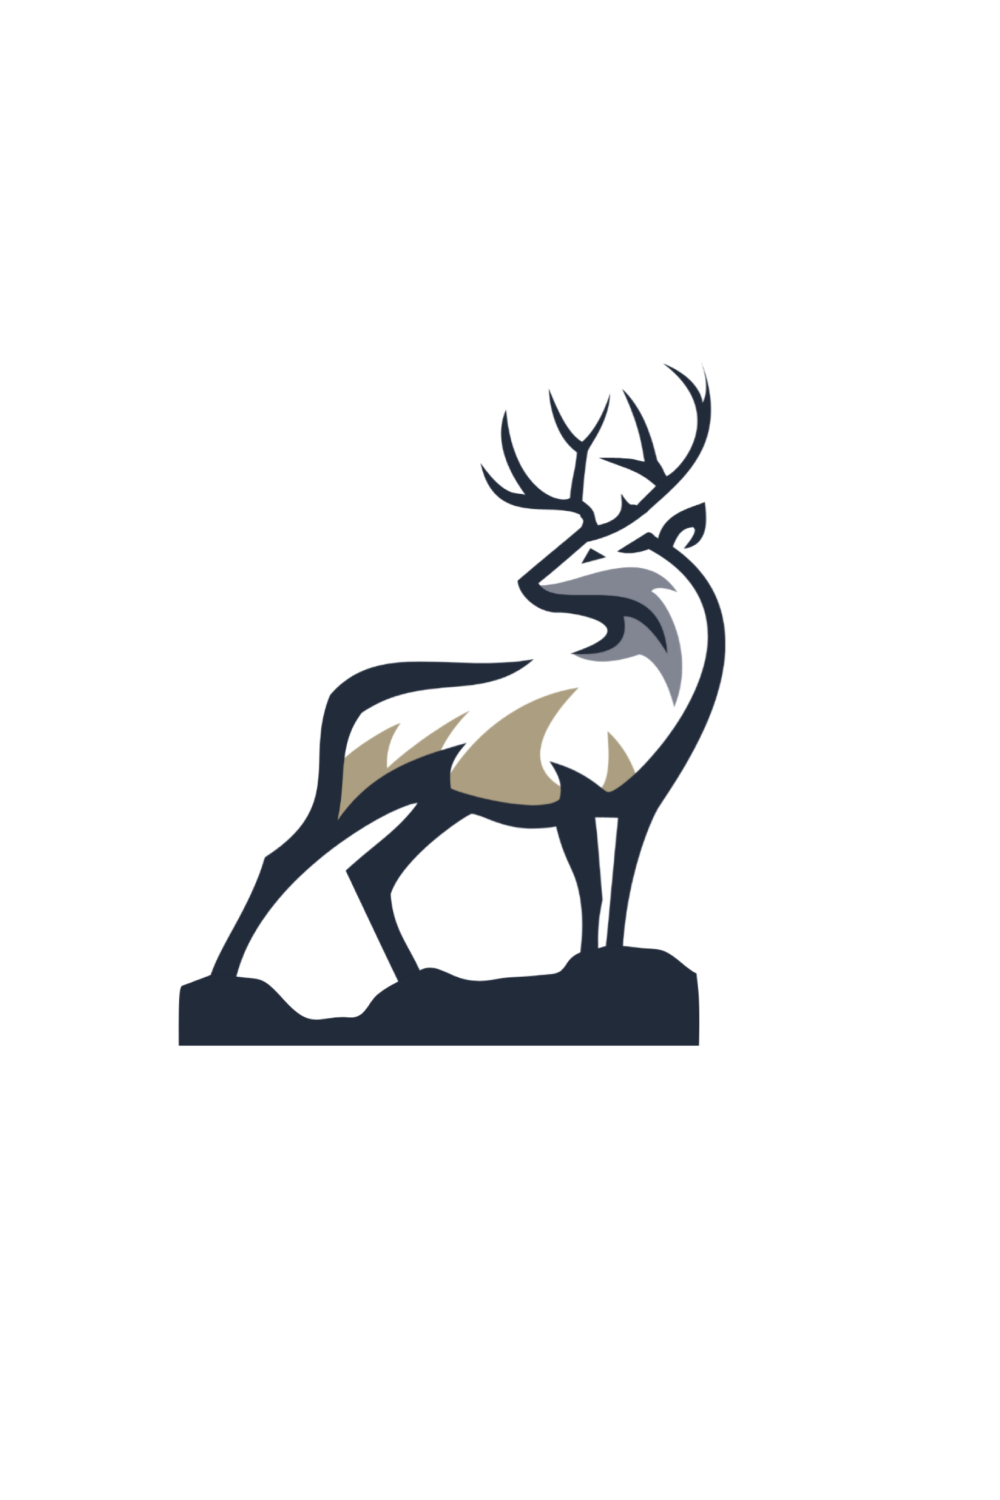 Creative abstract red deer head logo Royalty Free Vector